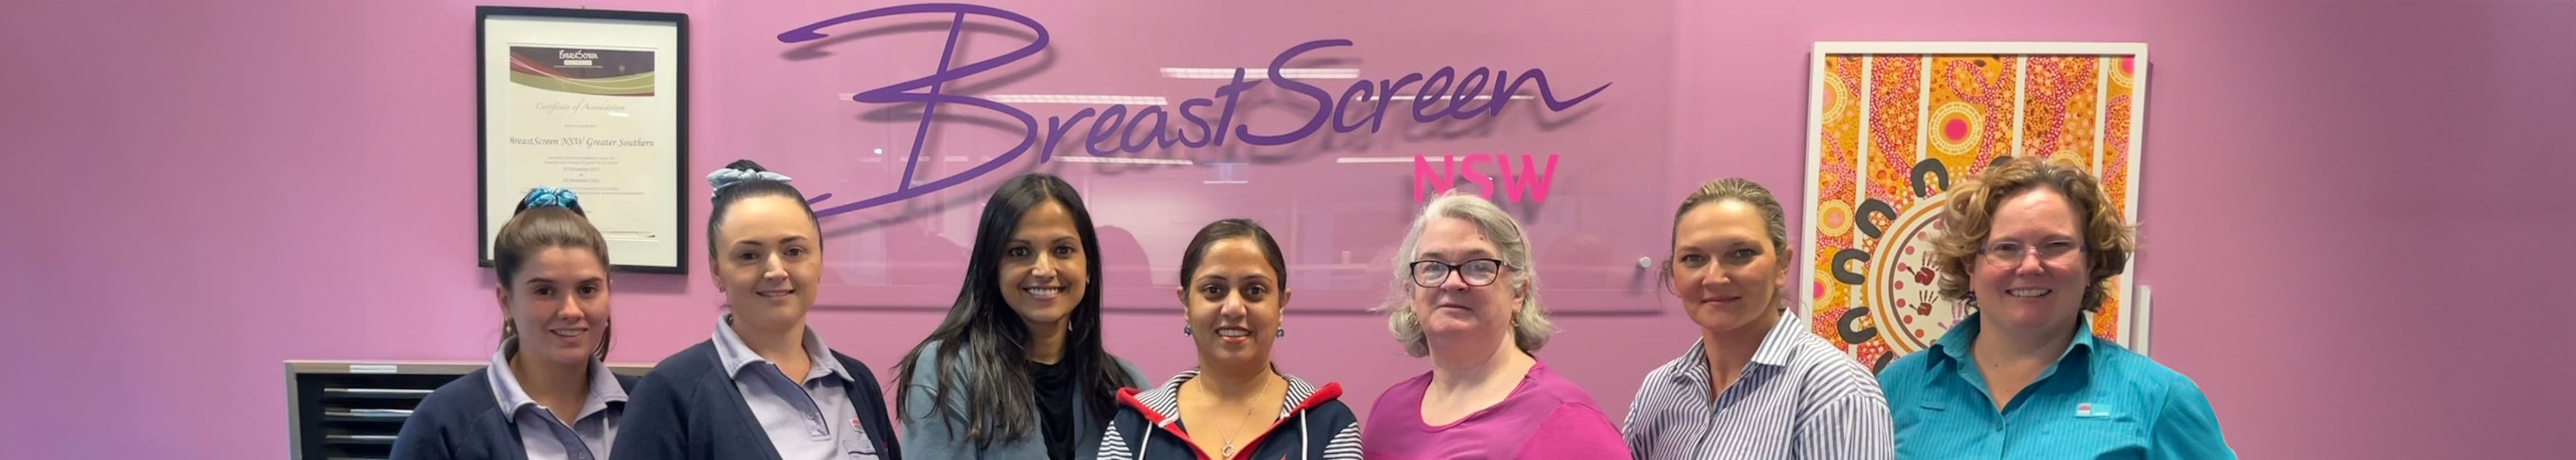 BreastScreen NSW staff in a BreastScreen NSW clinic